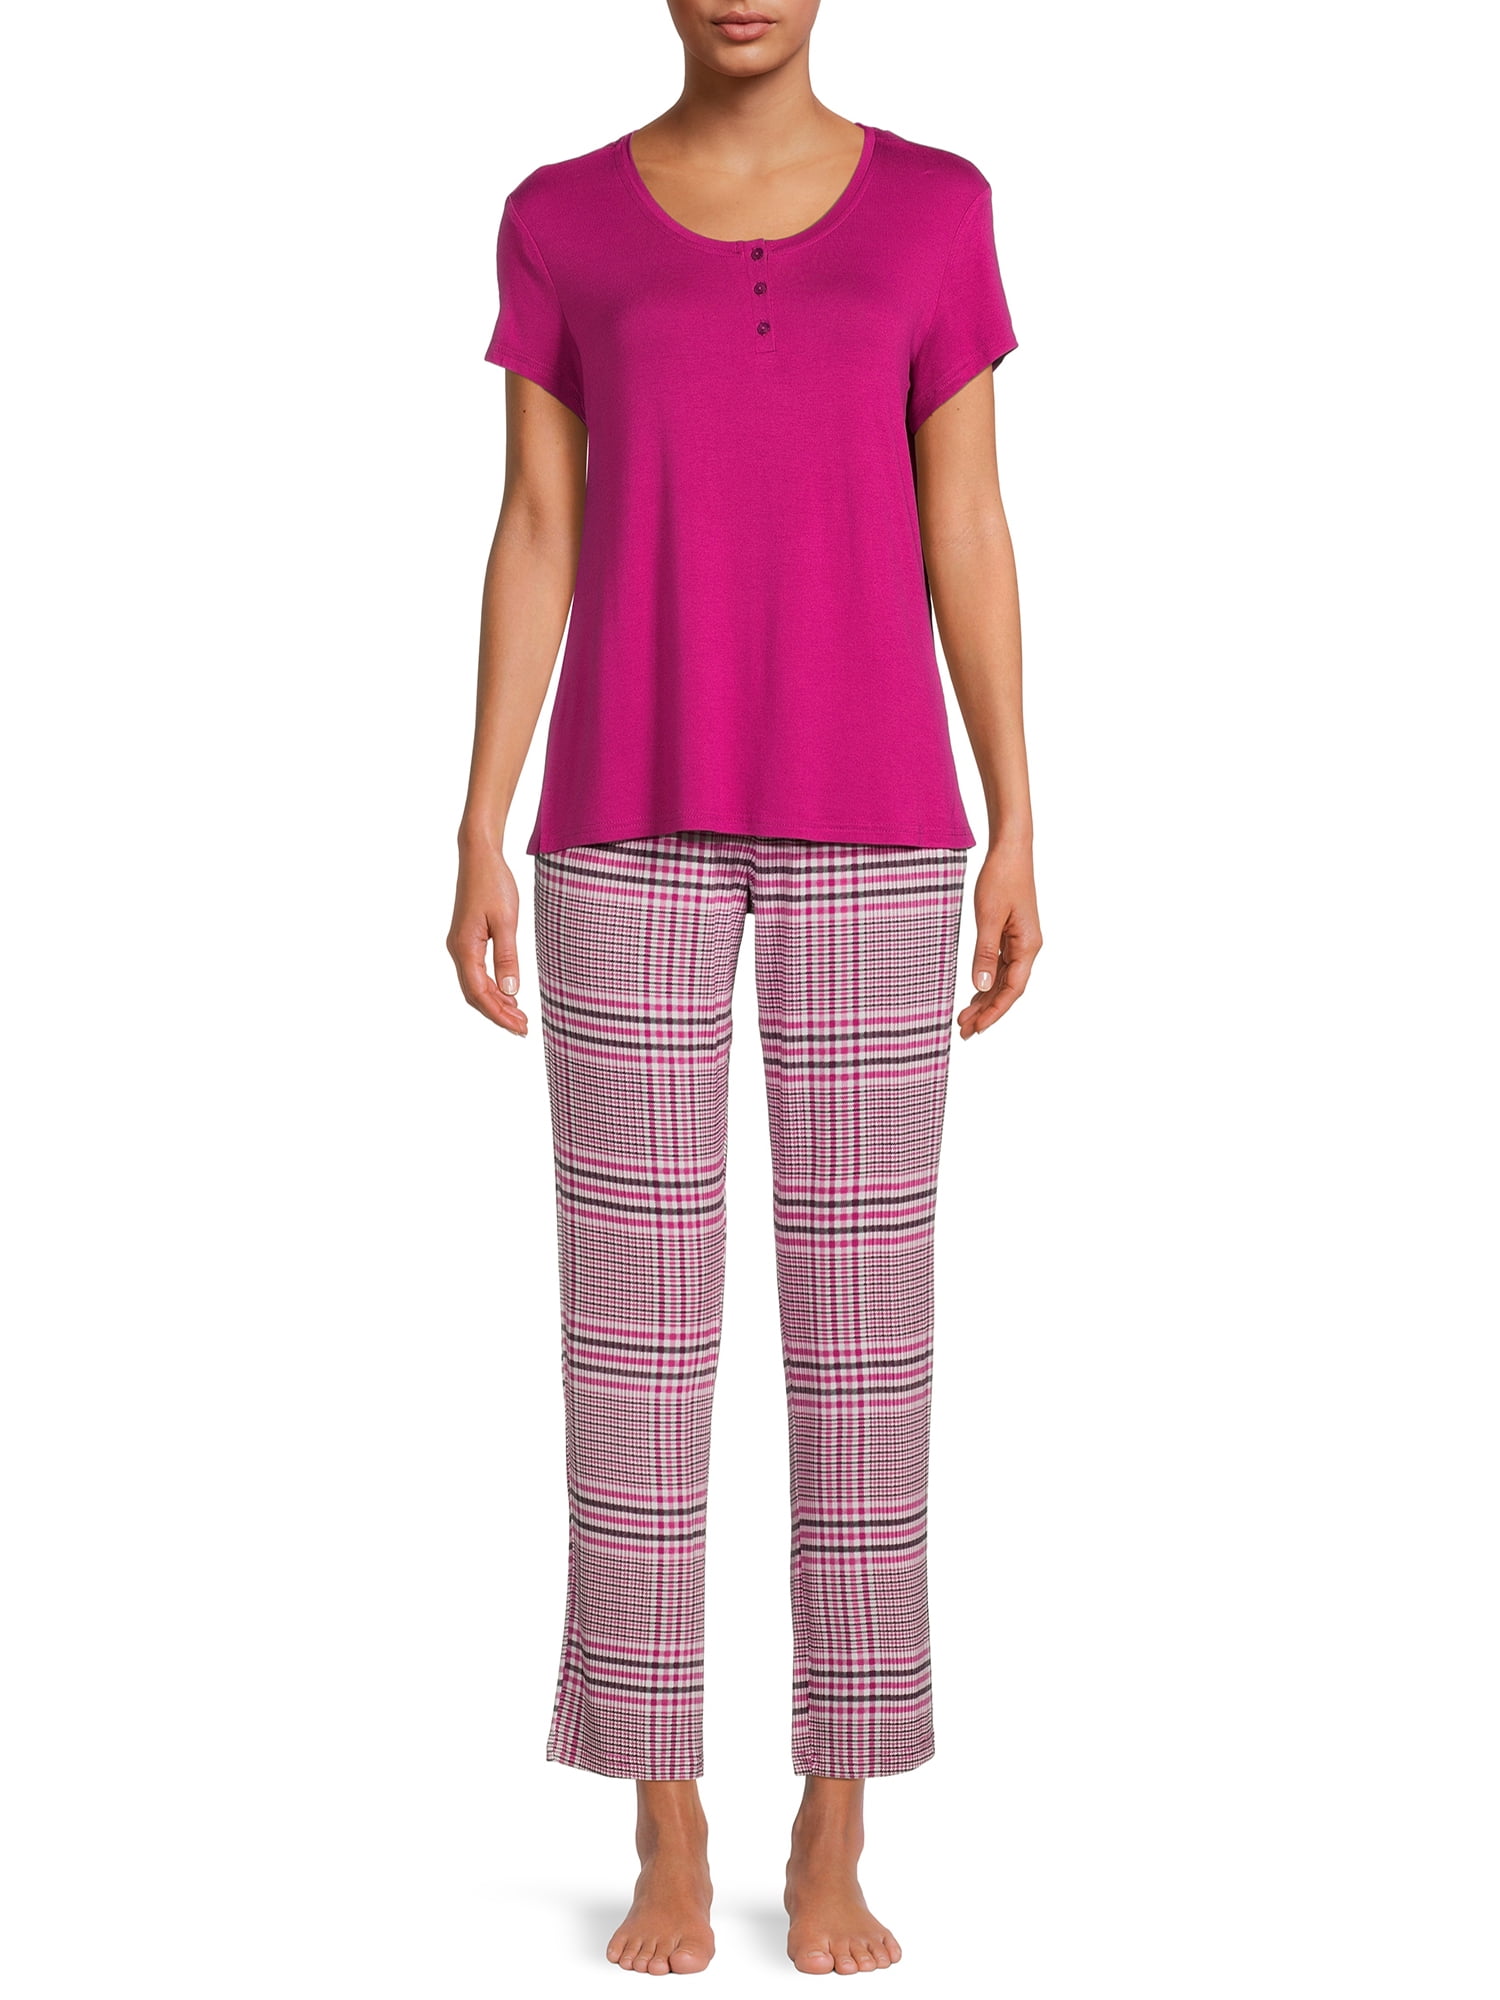 Hanes Women's and Women's Plus Comfort Supreme Short Sleeve Top and Pants  PJ Set, 2-Piece 